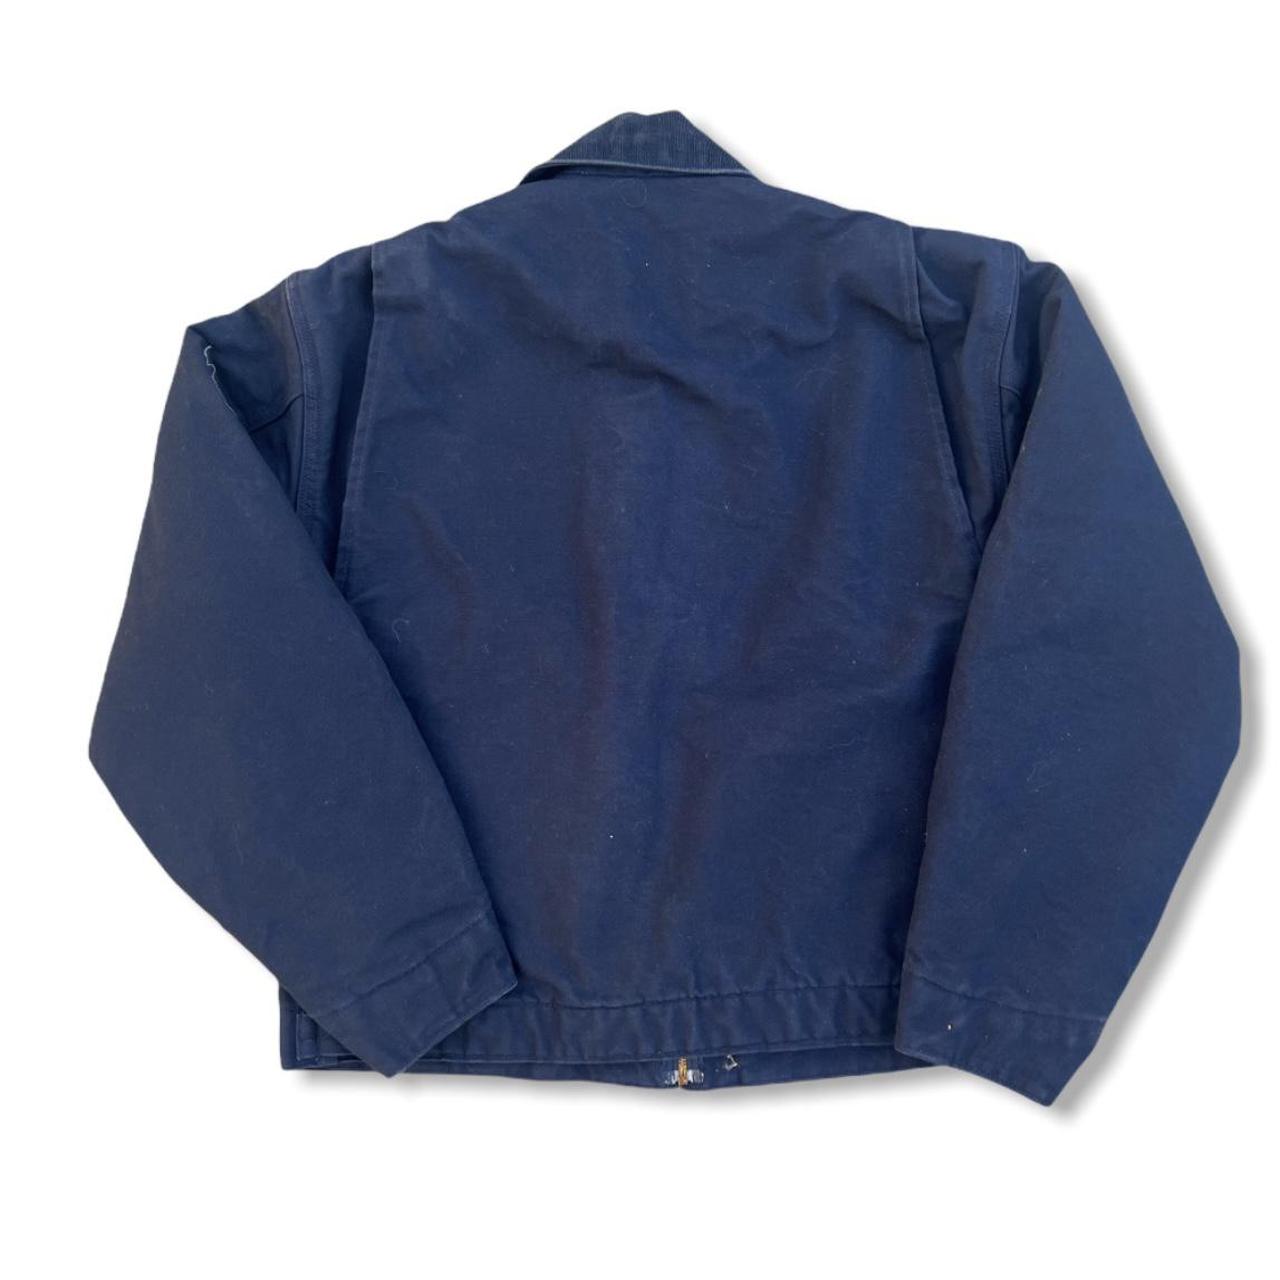 Product Image 3 - Vintage Carhartt Jacket
• Blanket Lined,